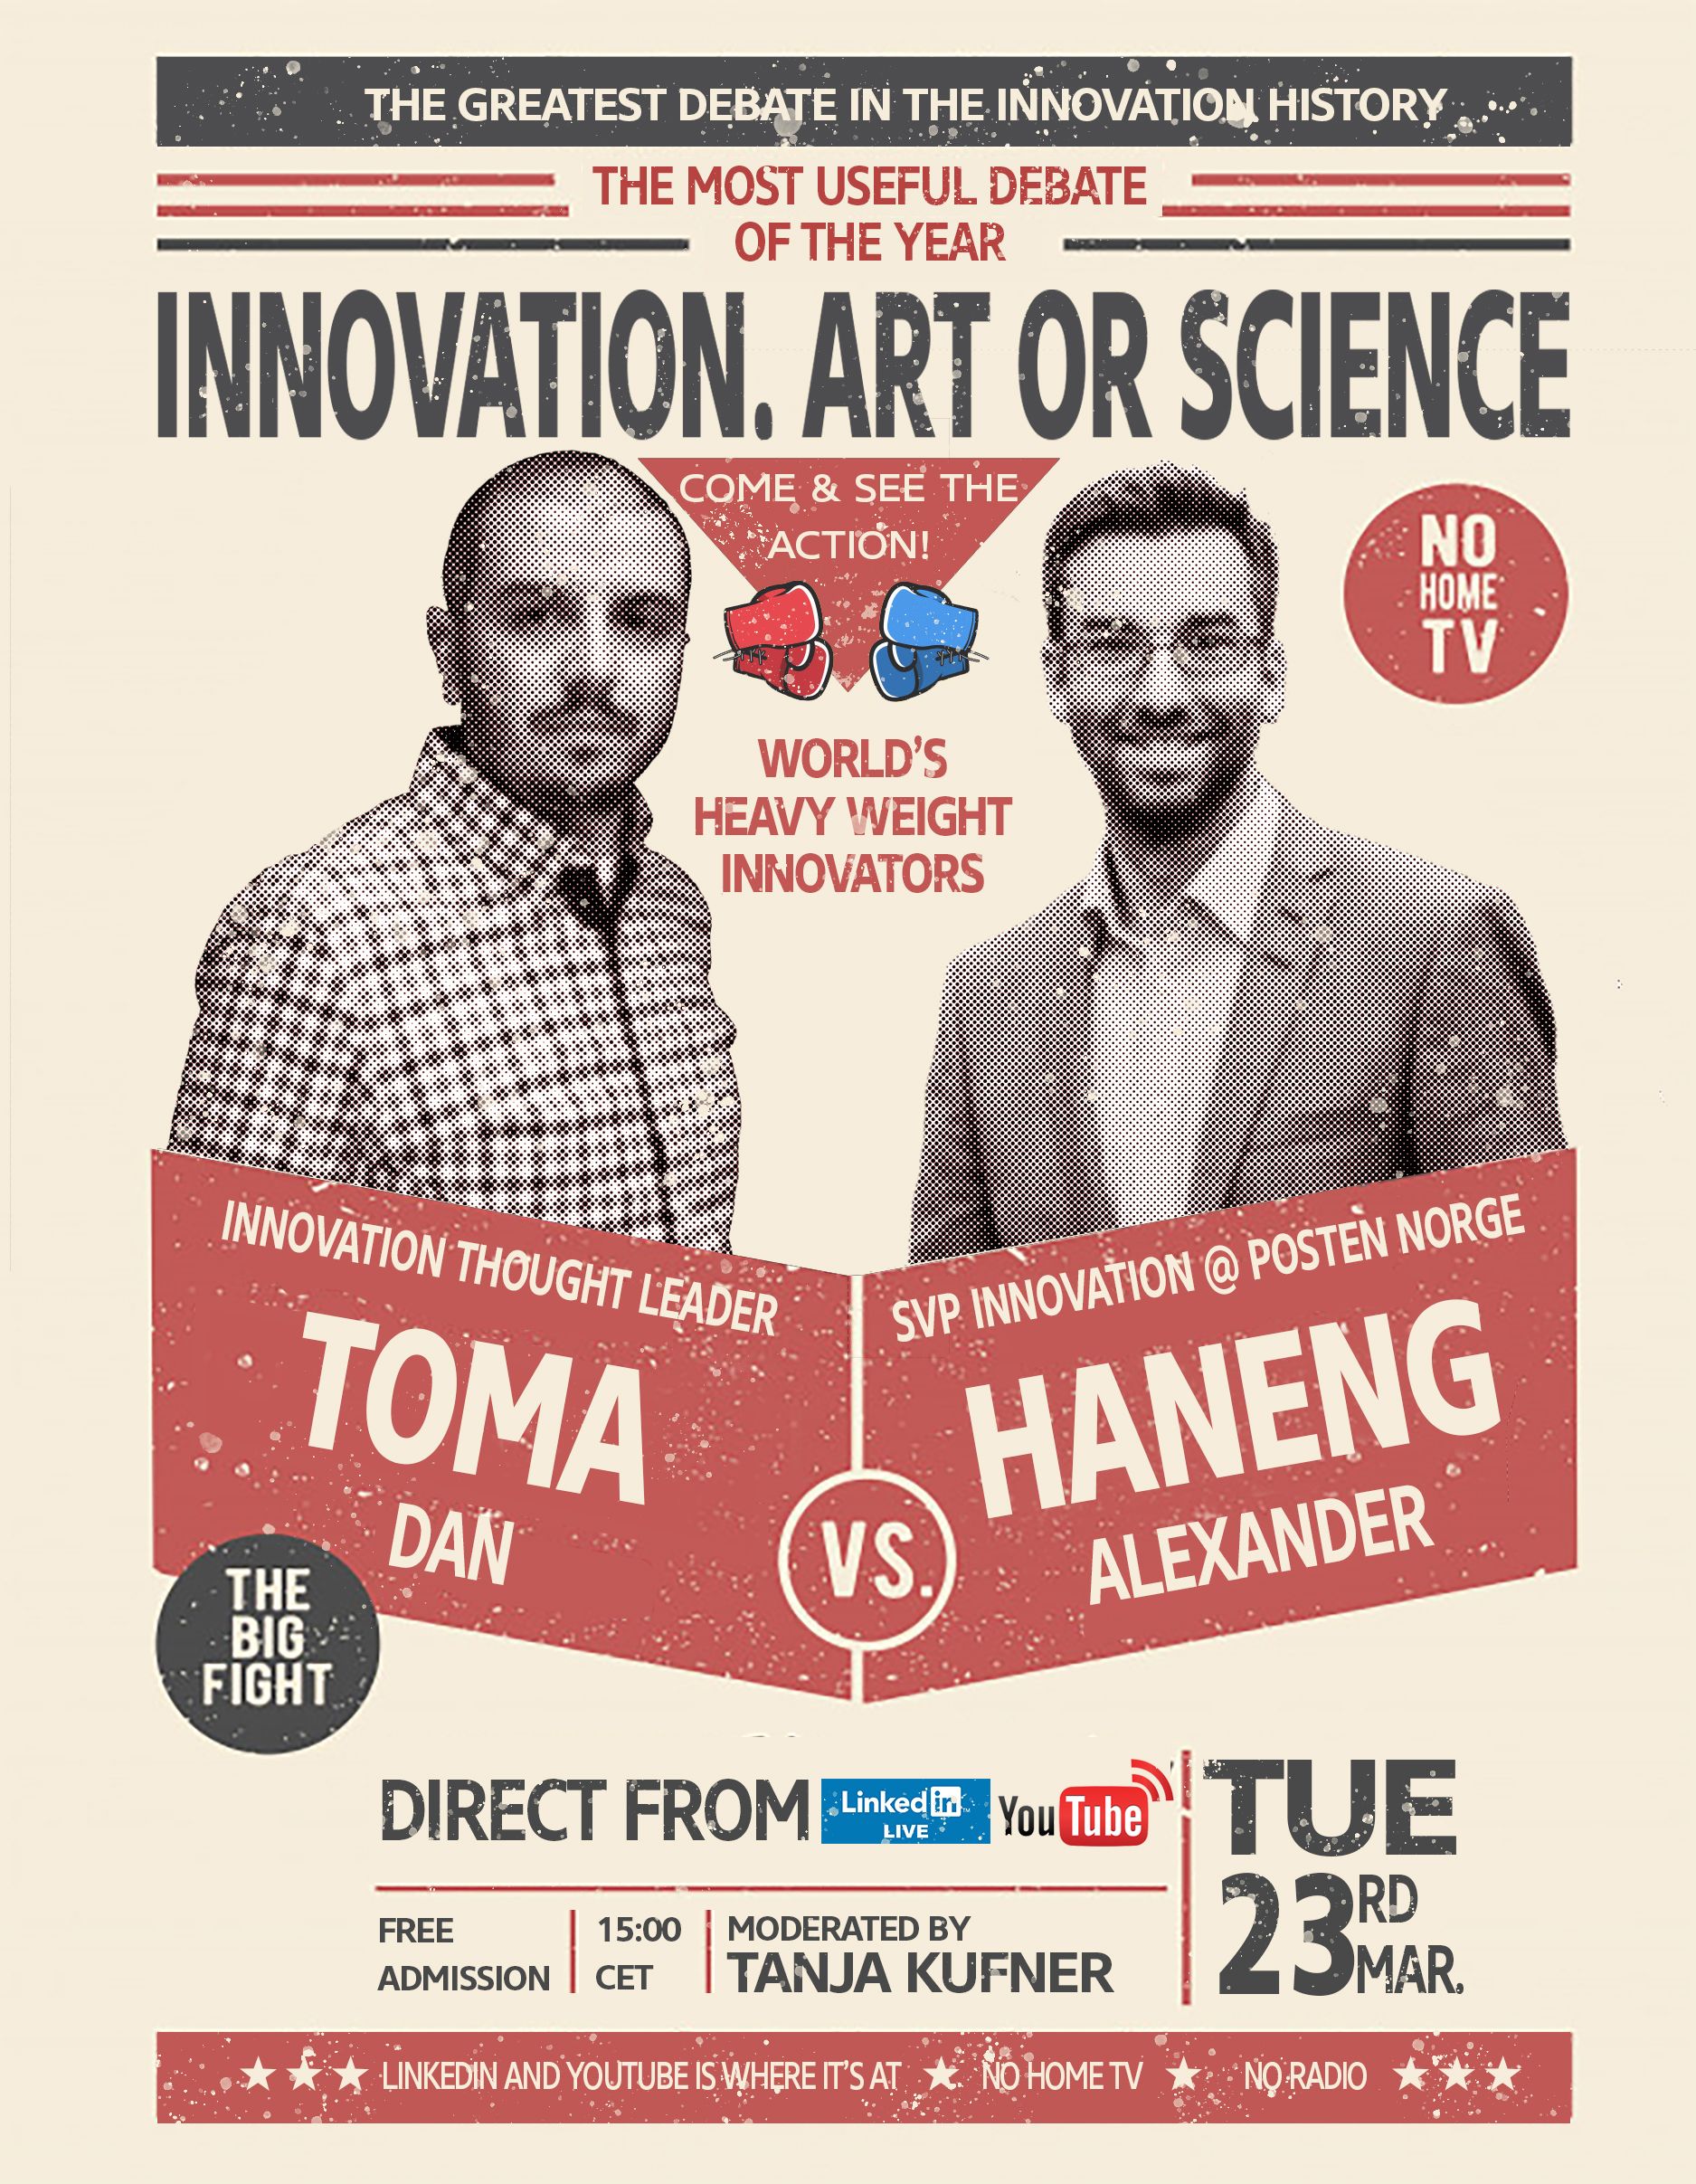 Boxing match Toma vs Haneng: Innovation Art or Science